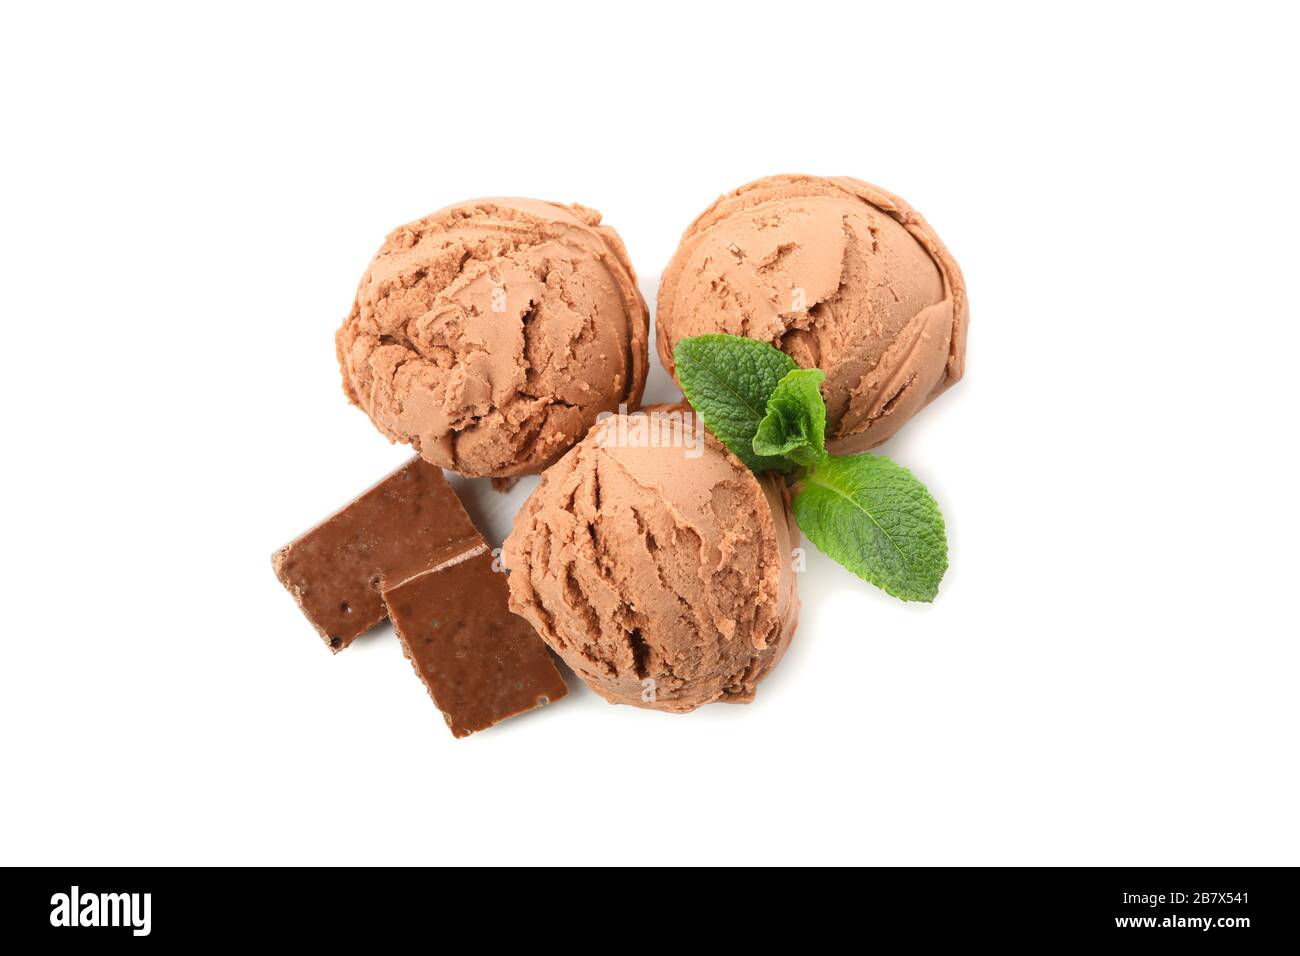 https://c8.alamy.com/comp/2B7X541/ice-cream-balls-mint-and-chocolate-isolated-on-white-background-2B7X541.jpg